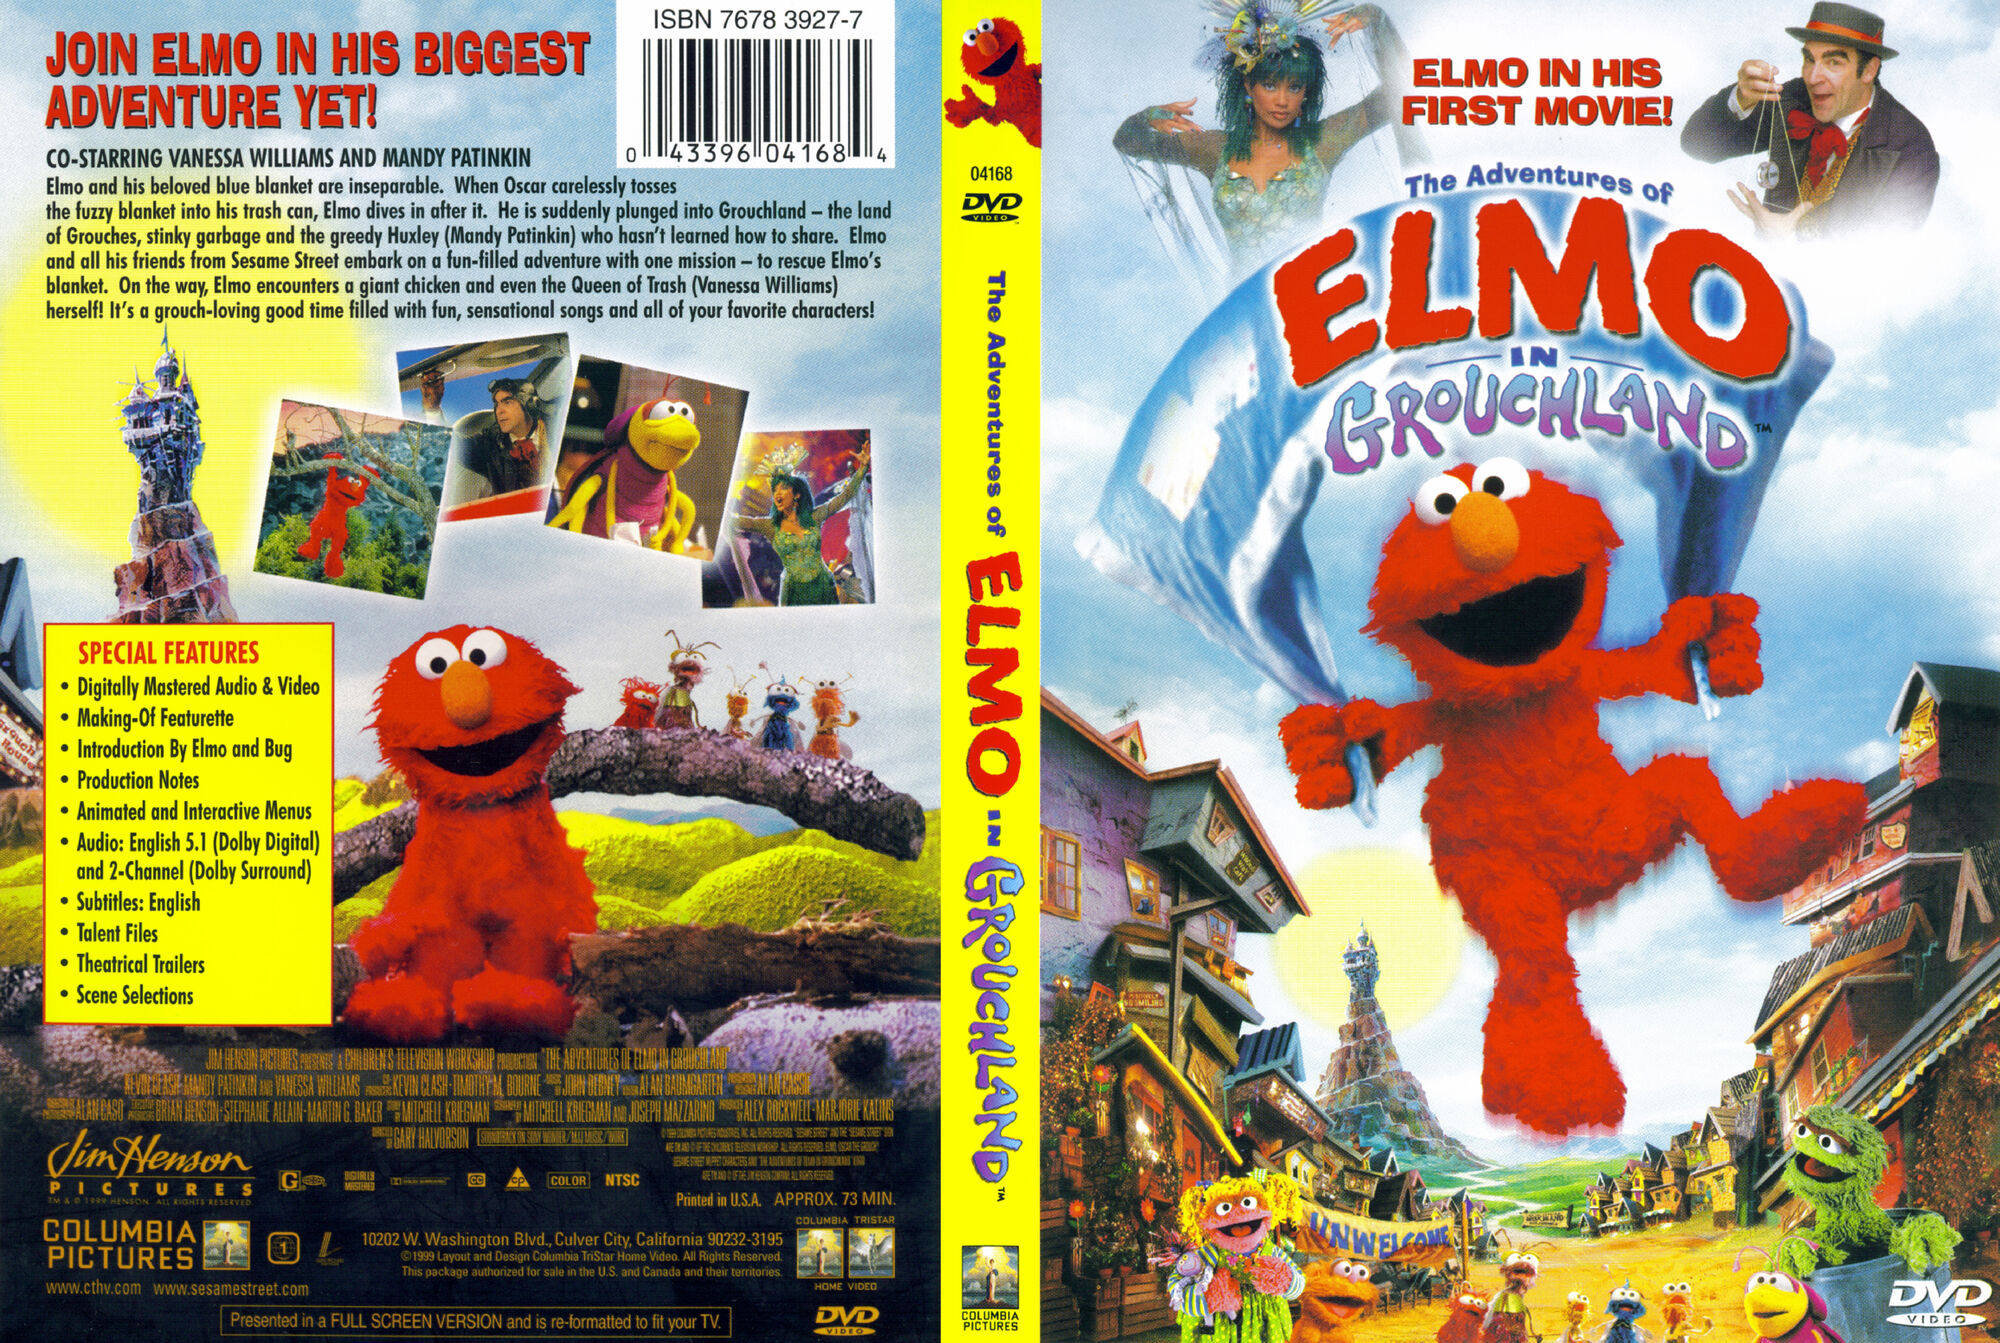 The Adventures of Elmo in Grouchland | DVD Database | Fandom